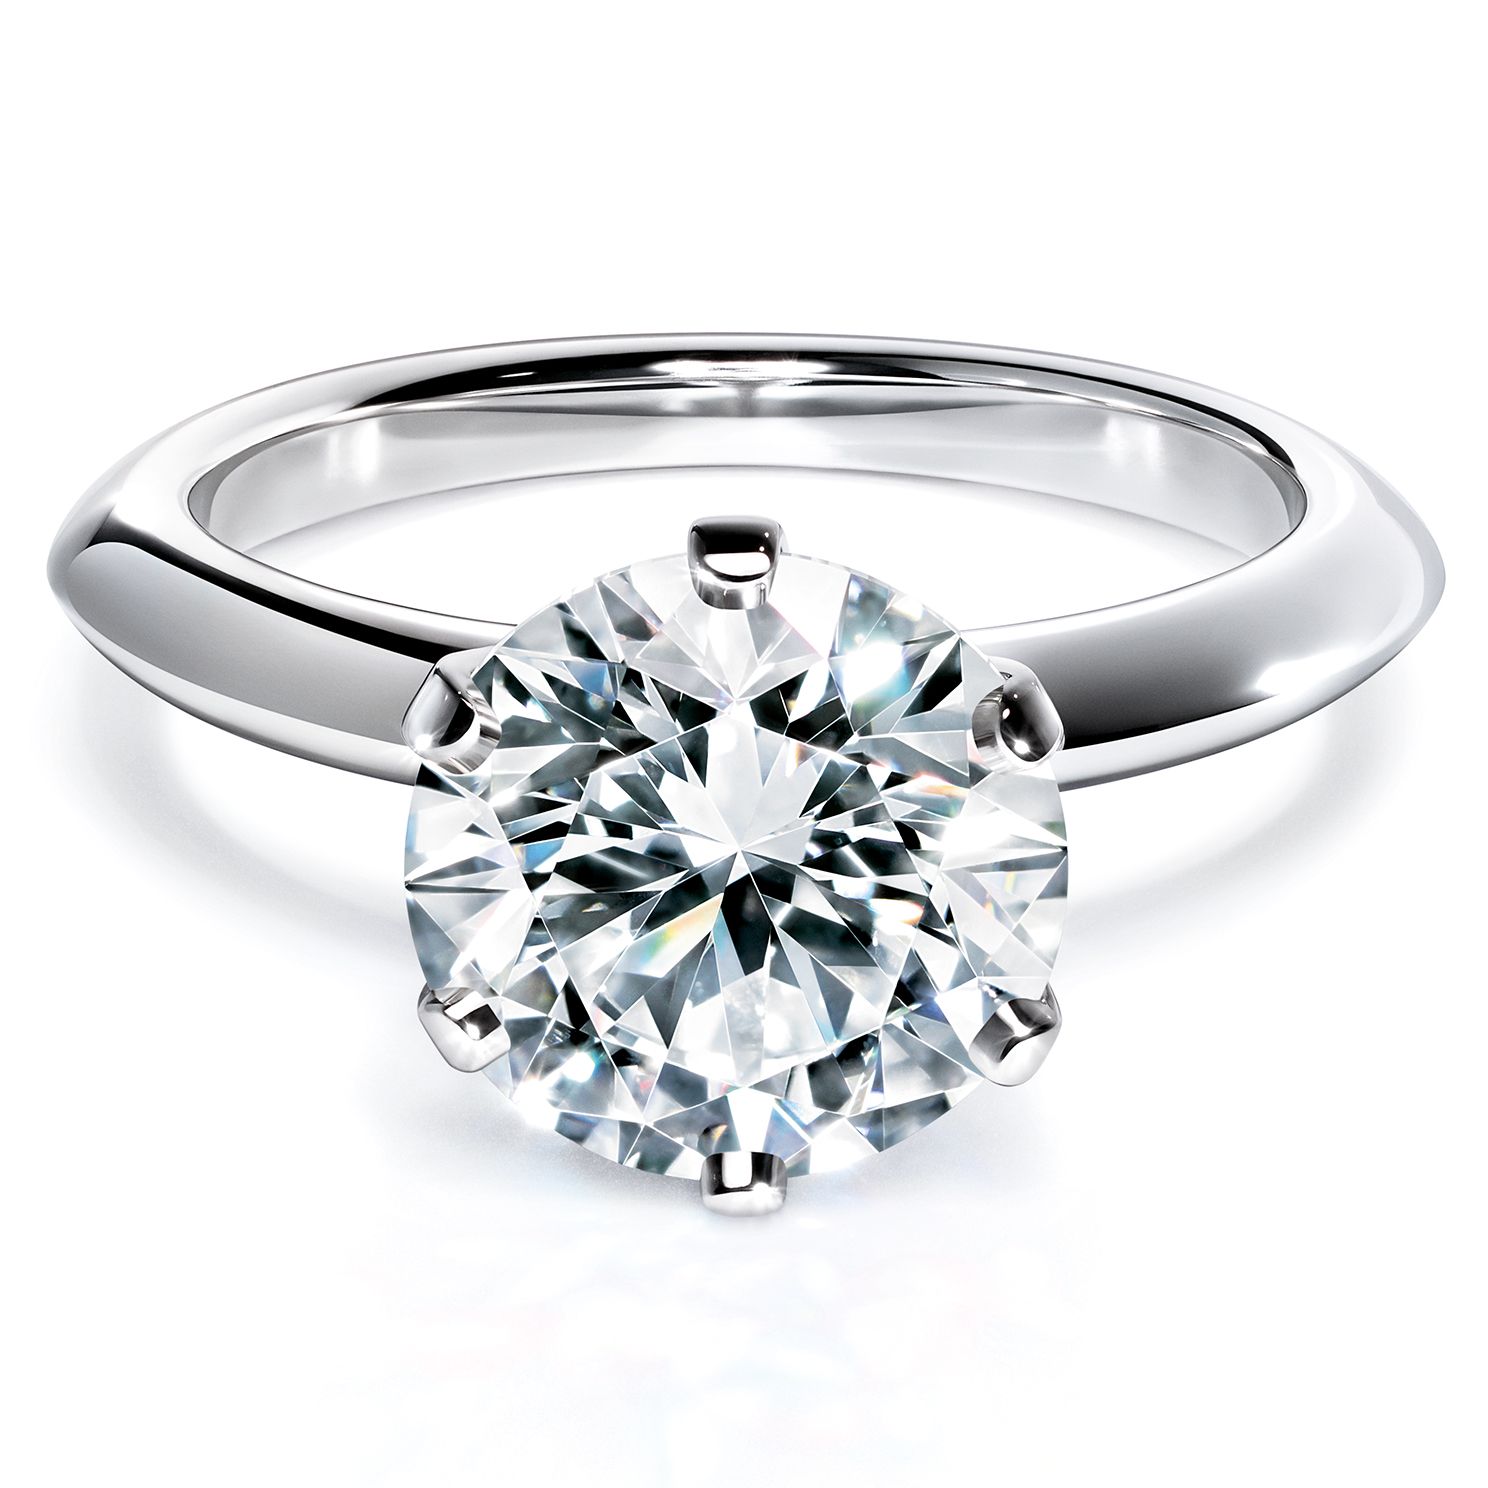 Tiffany And Co Wedding Ring Harga - Wedding Rings Sets Ideas